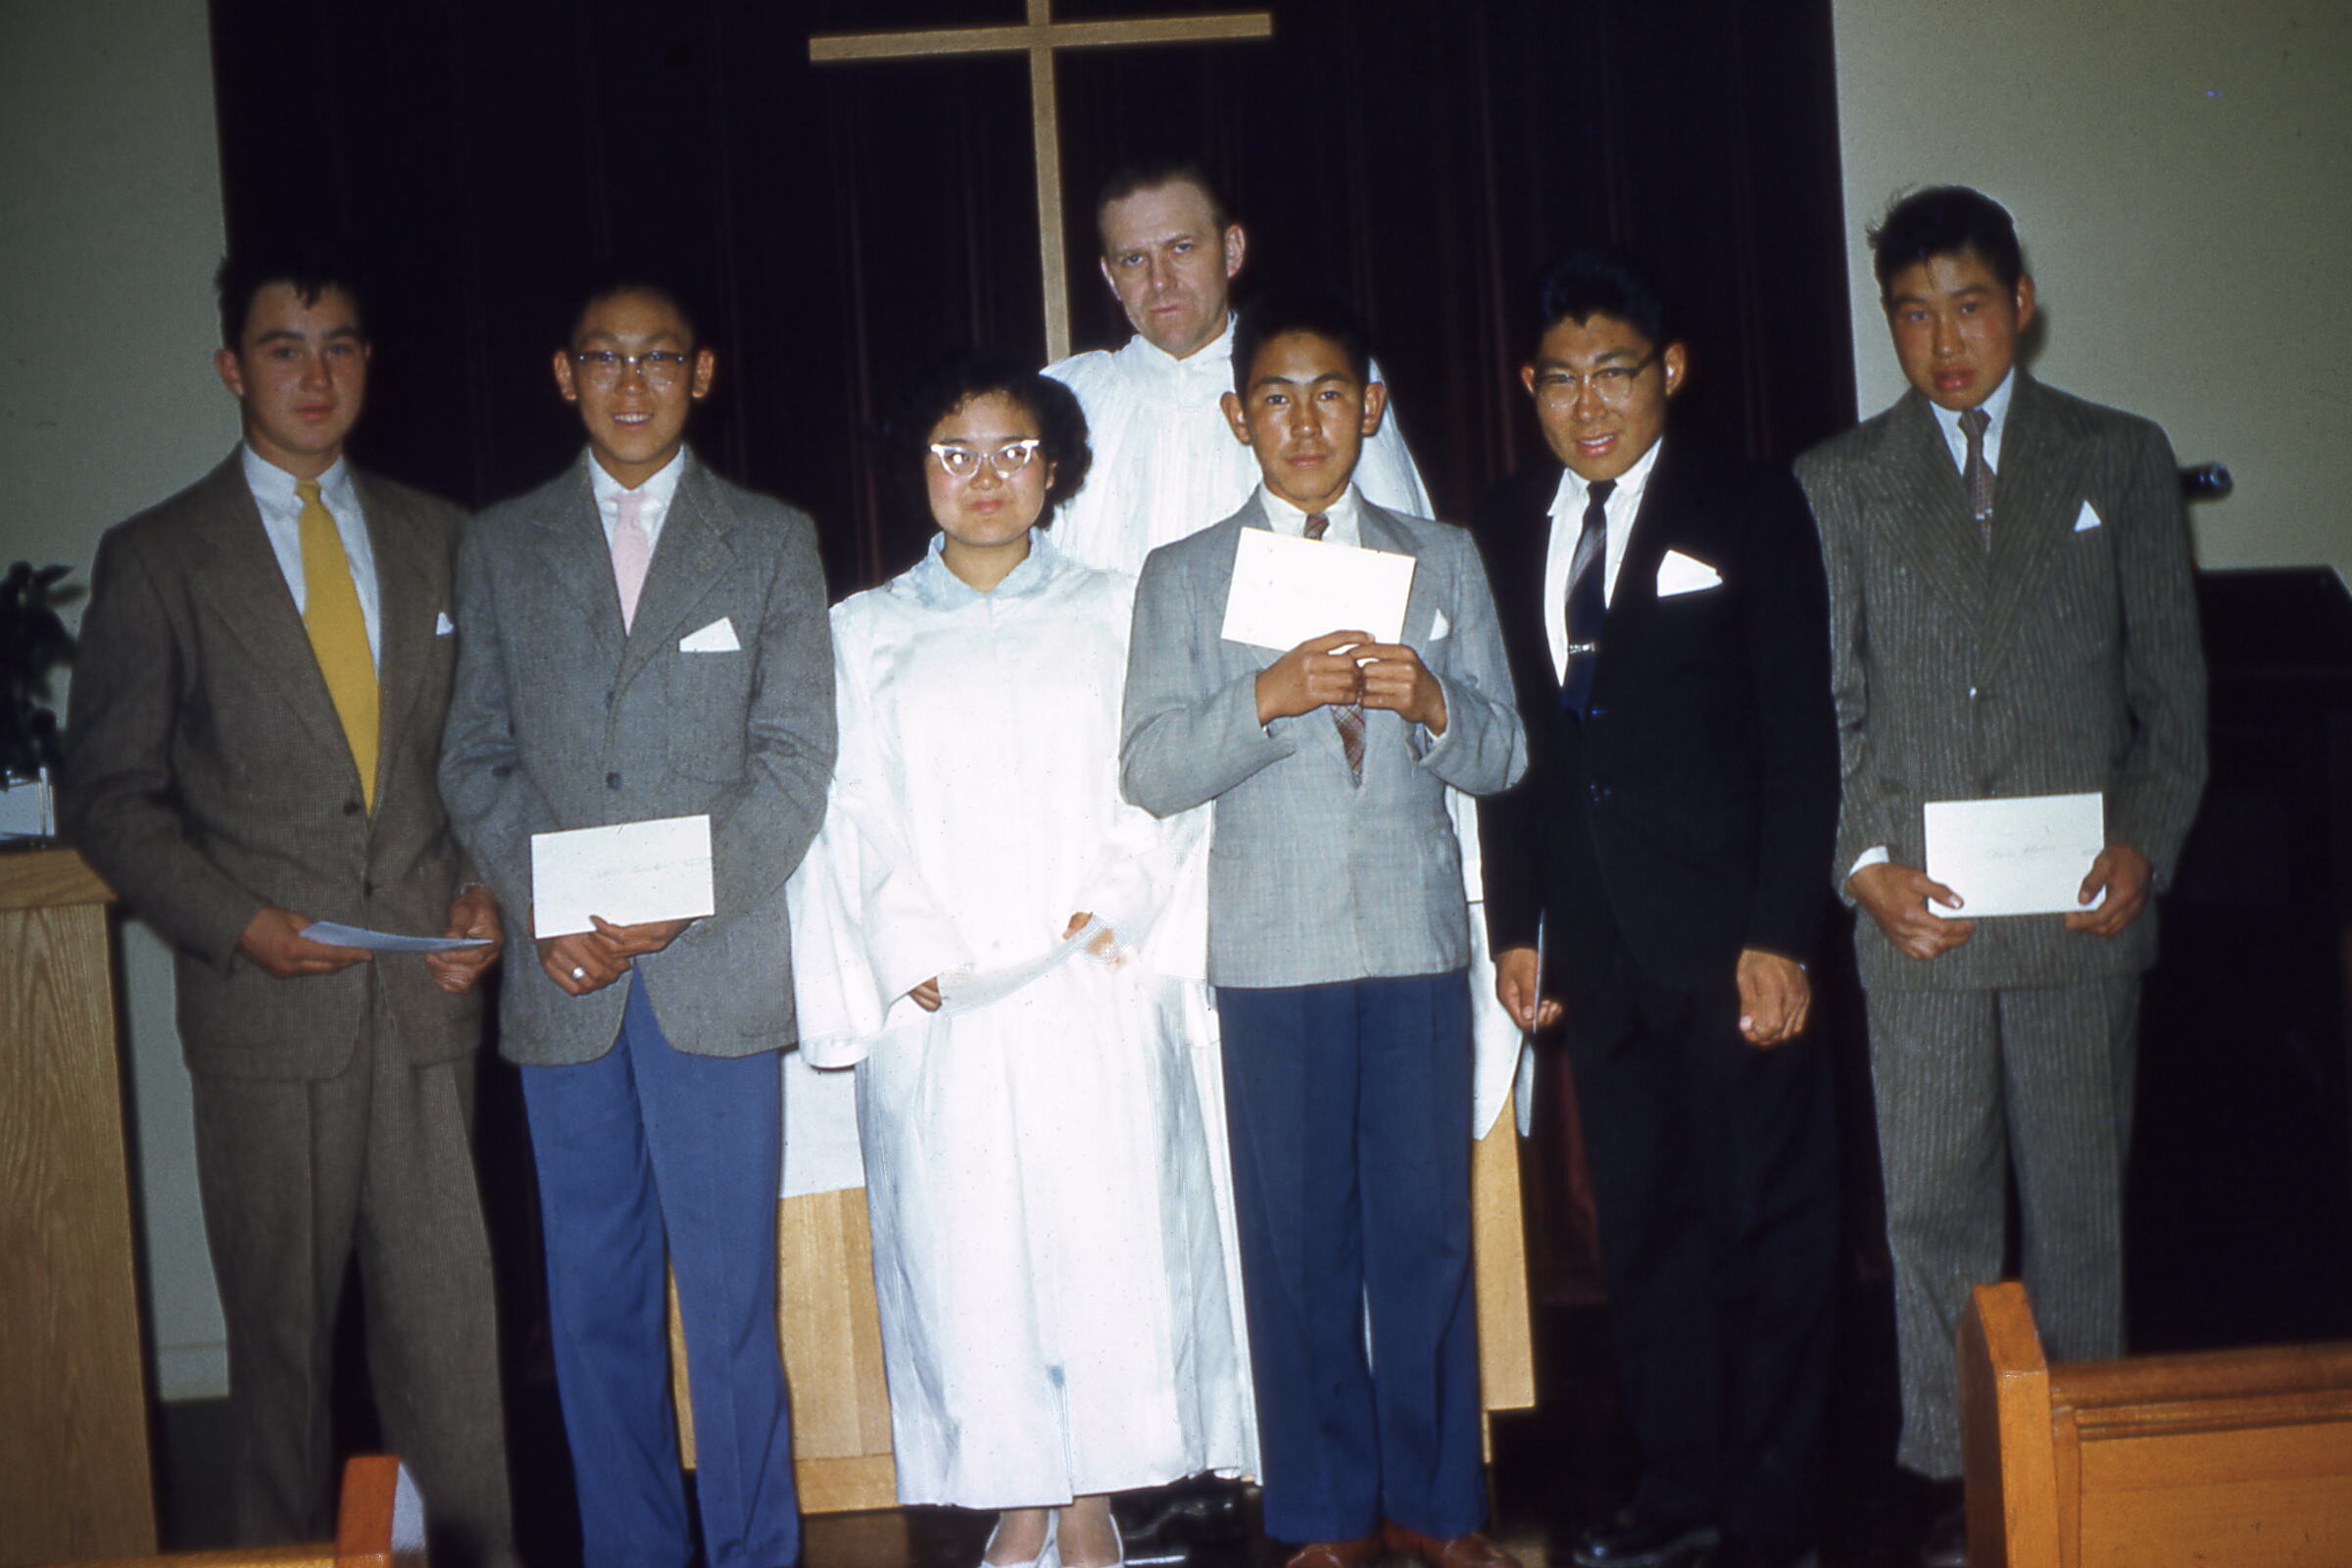 1960 Confirmation Class.jpg